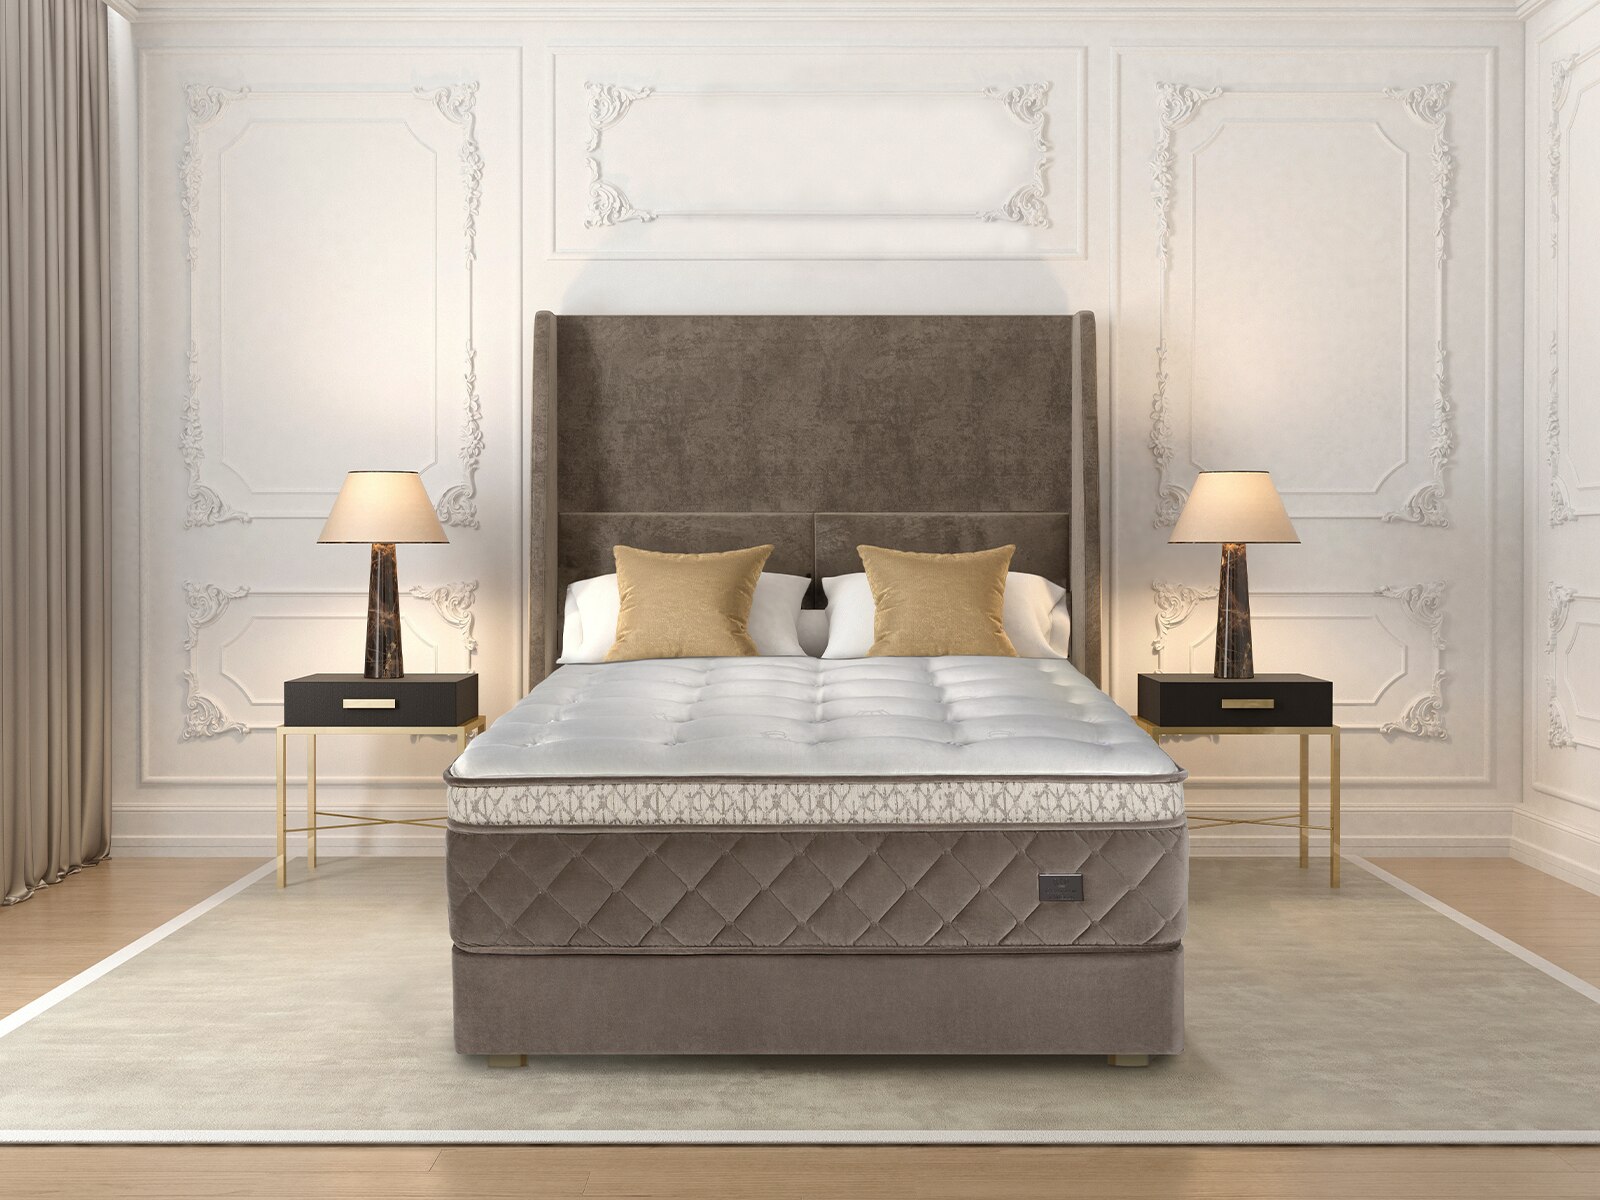 chattam & wells olivia firm mattress